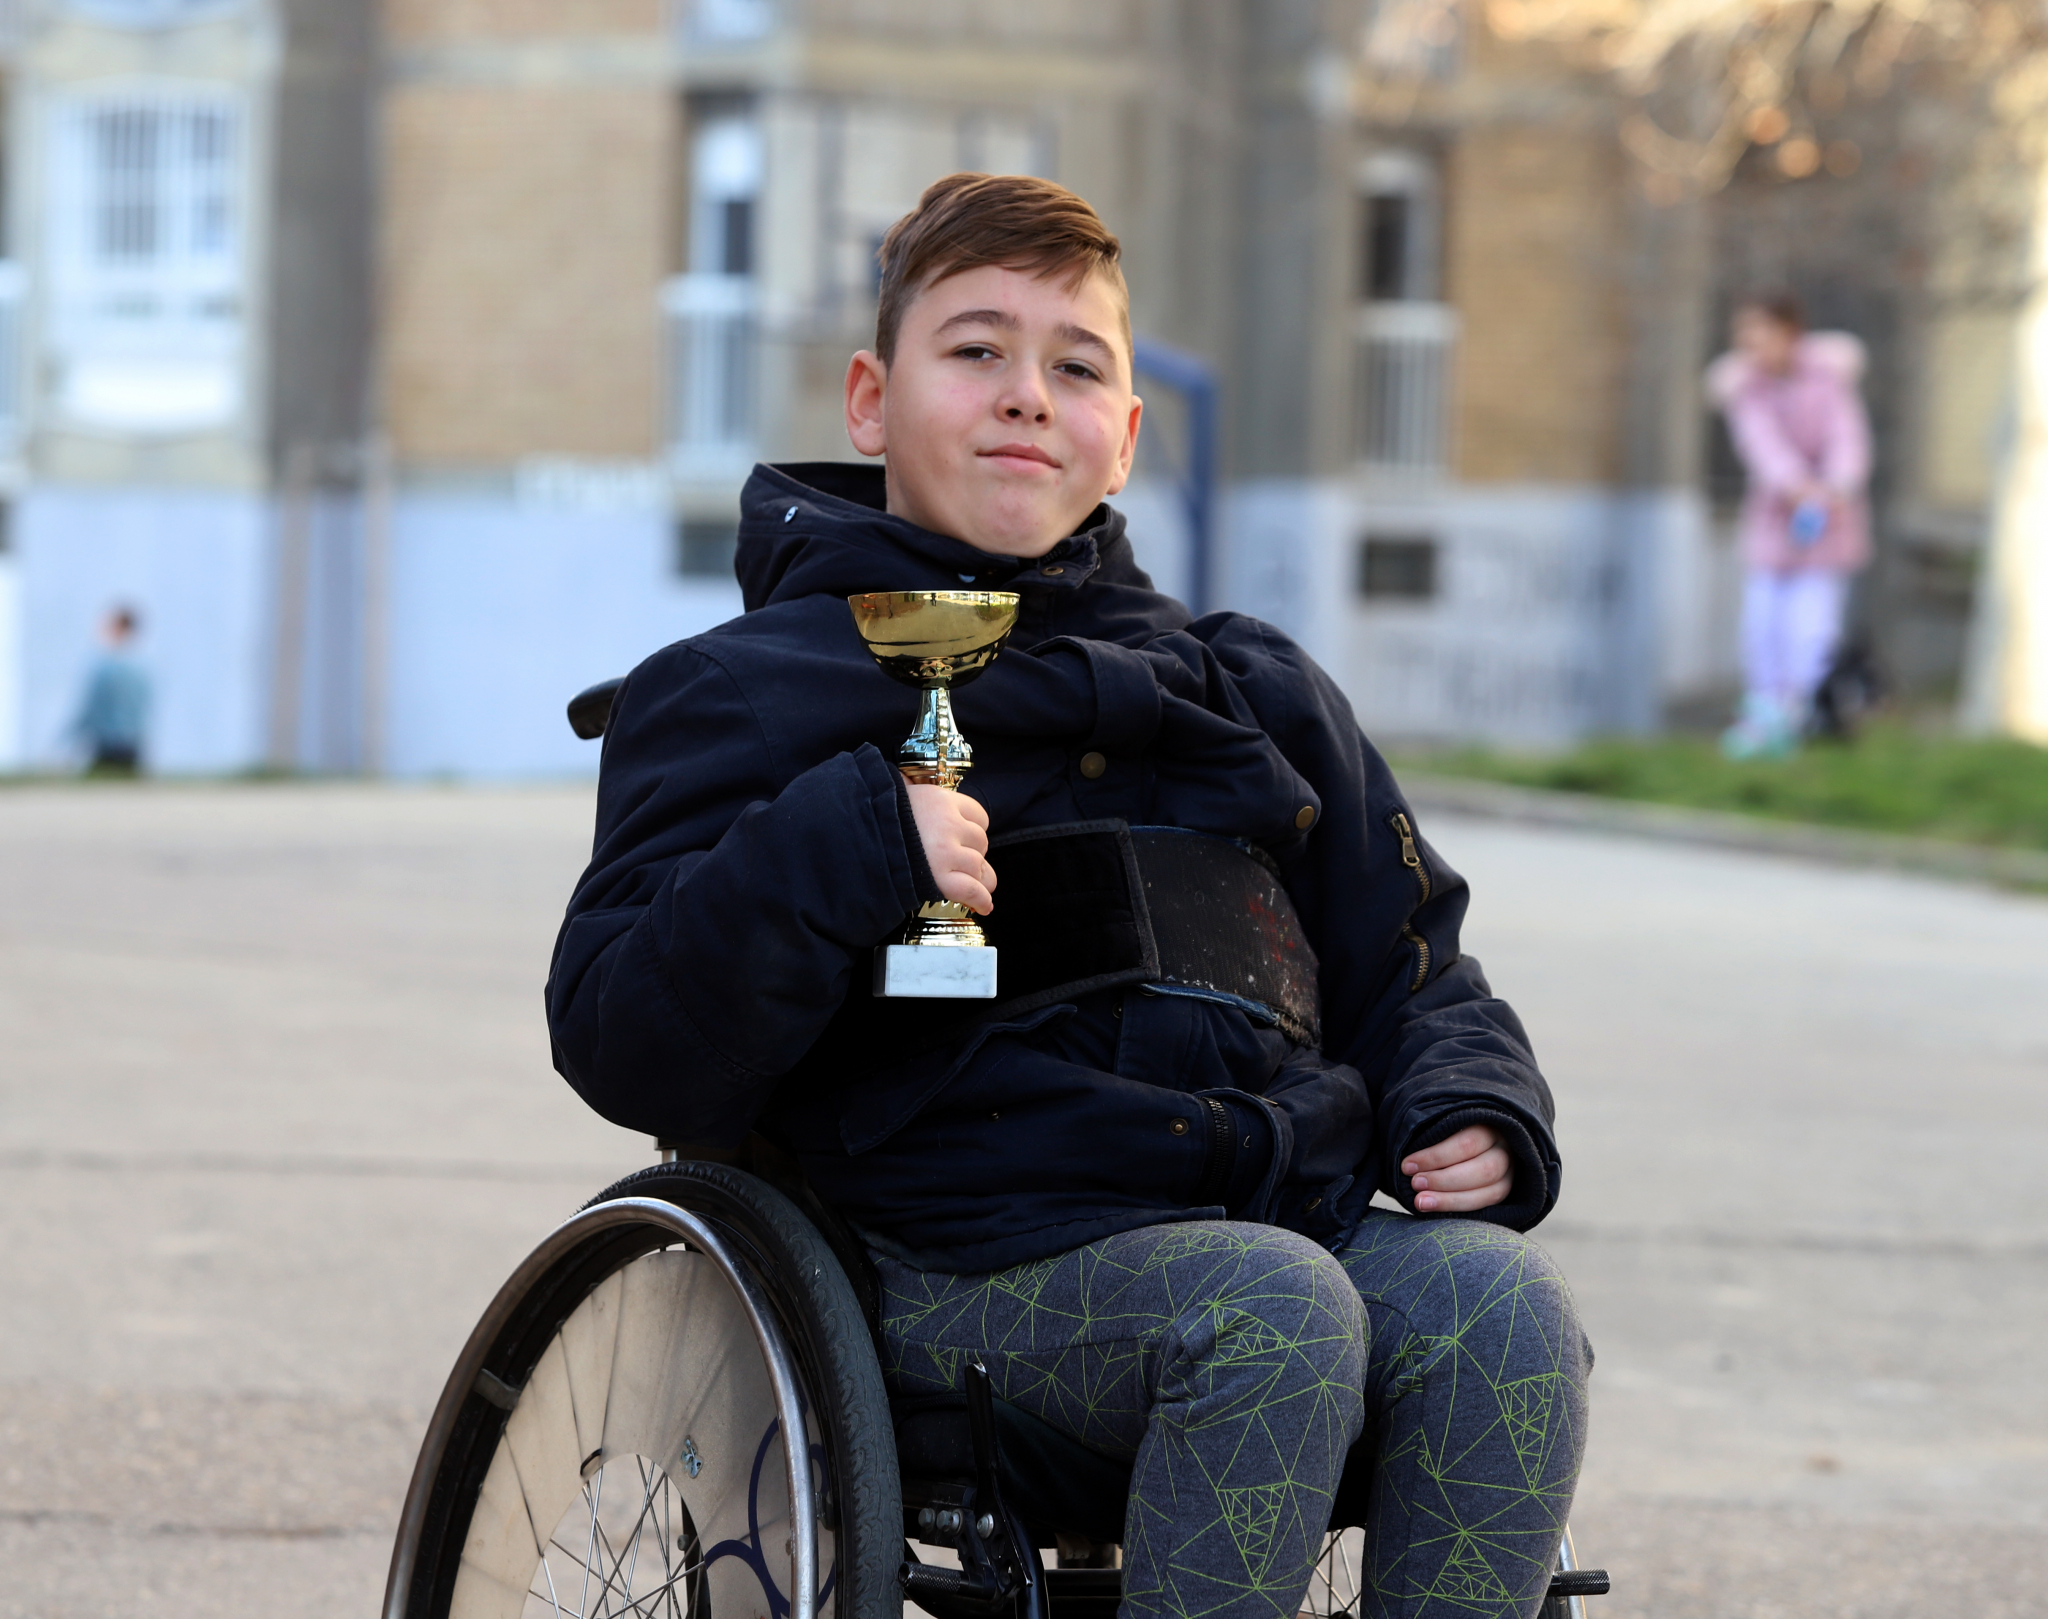 ROĐENI BORAC Aleksej Spasovski (10), mladi šahista iz Novog Sada, daje primer značenja reči heroj